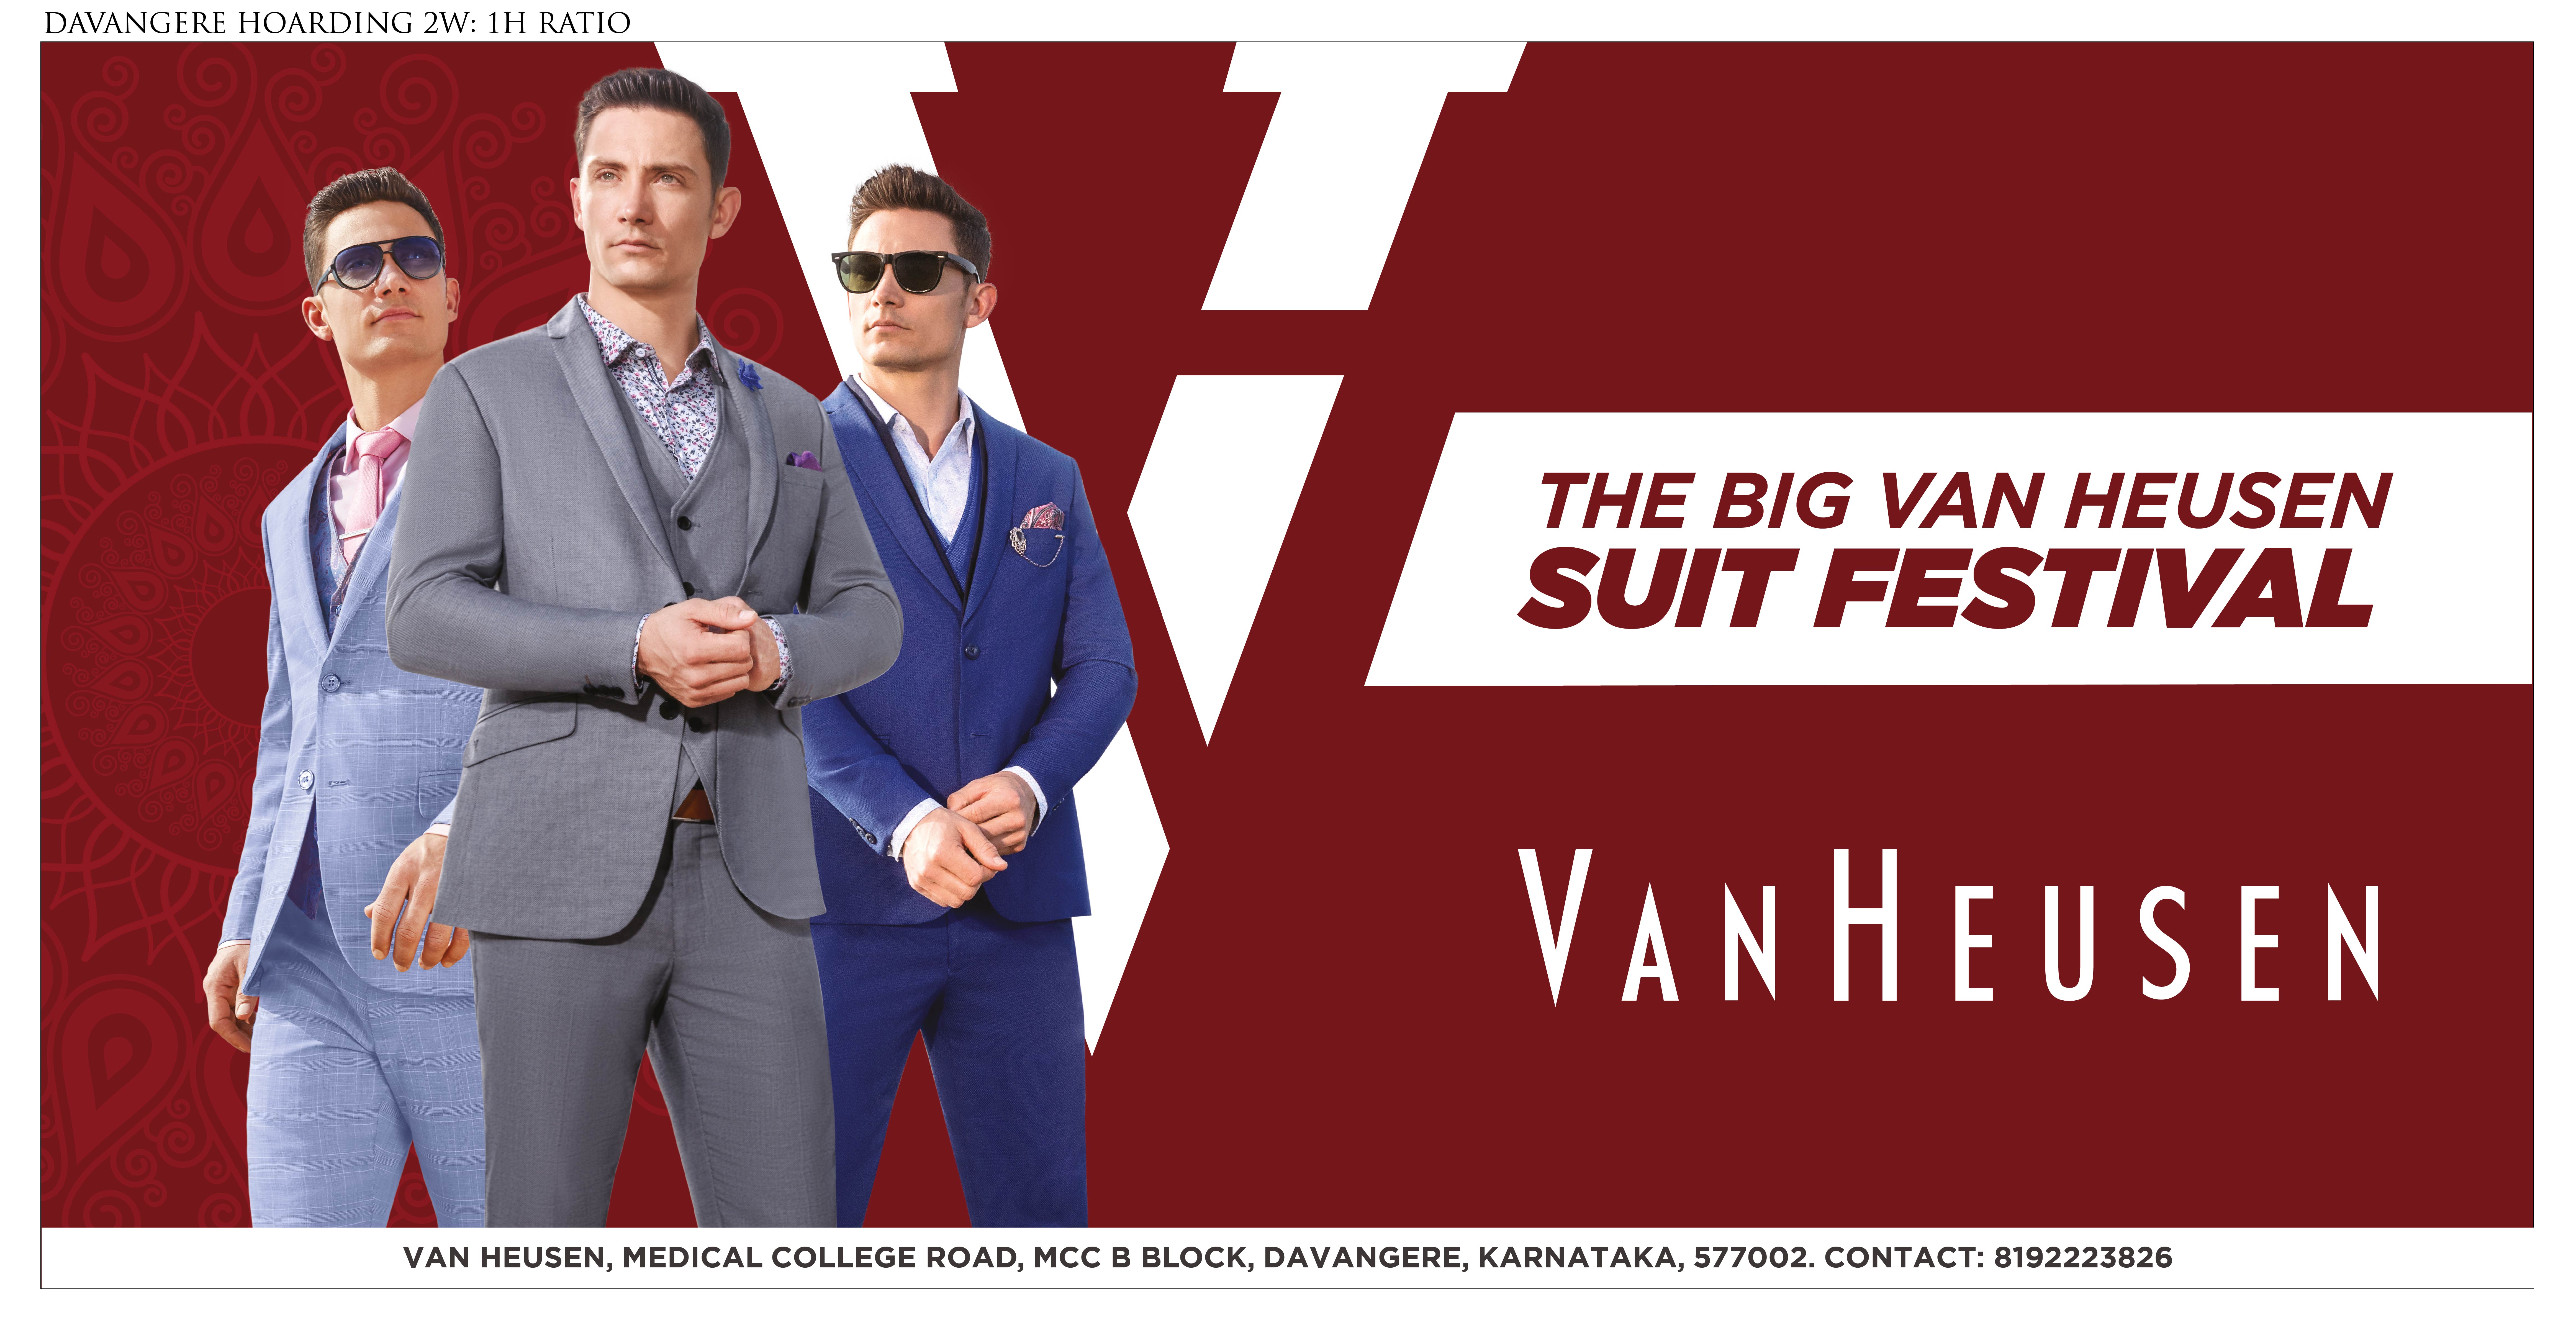 own-this-festive-season-with-the-big-van-heusen-suit-festival